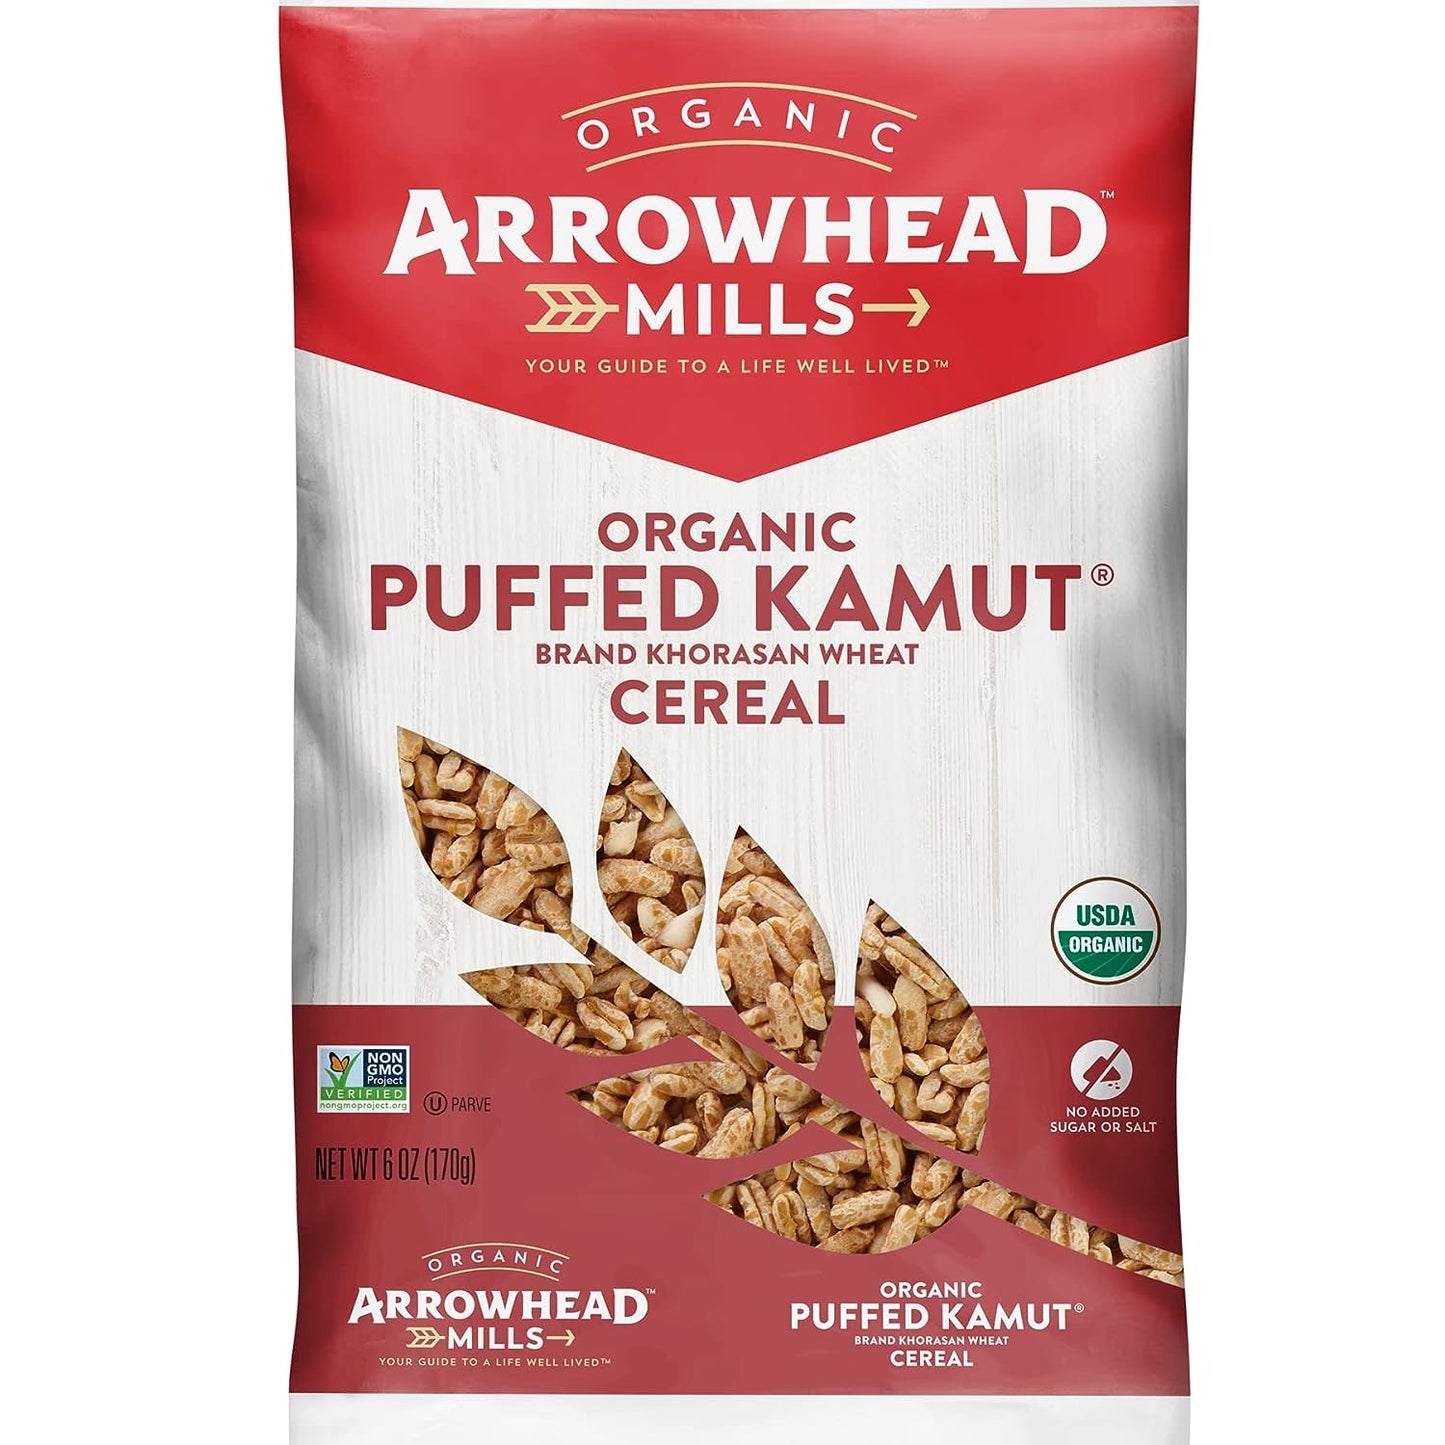 Arrowhead Mills Organic Puffed Kamut Cereal, 6 oz - Pack of 3